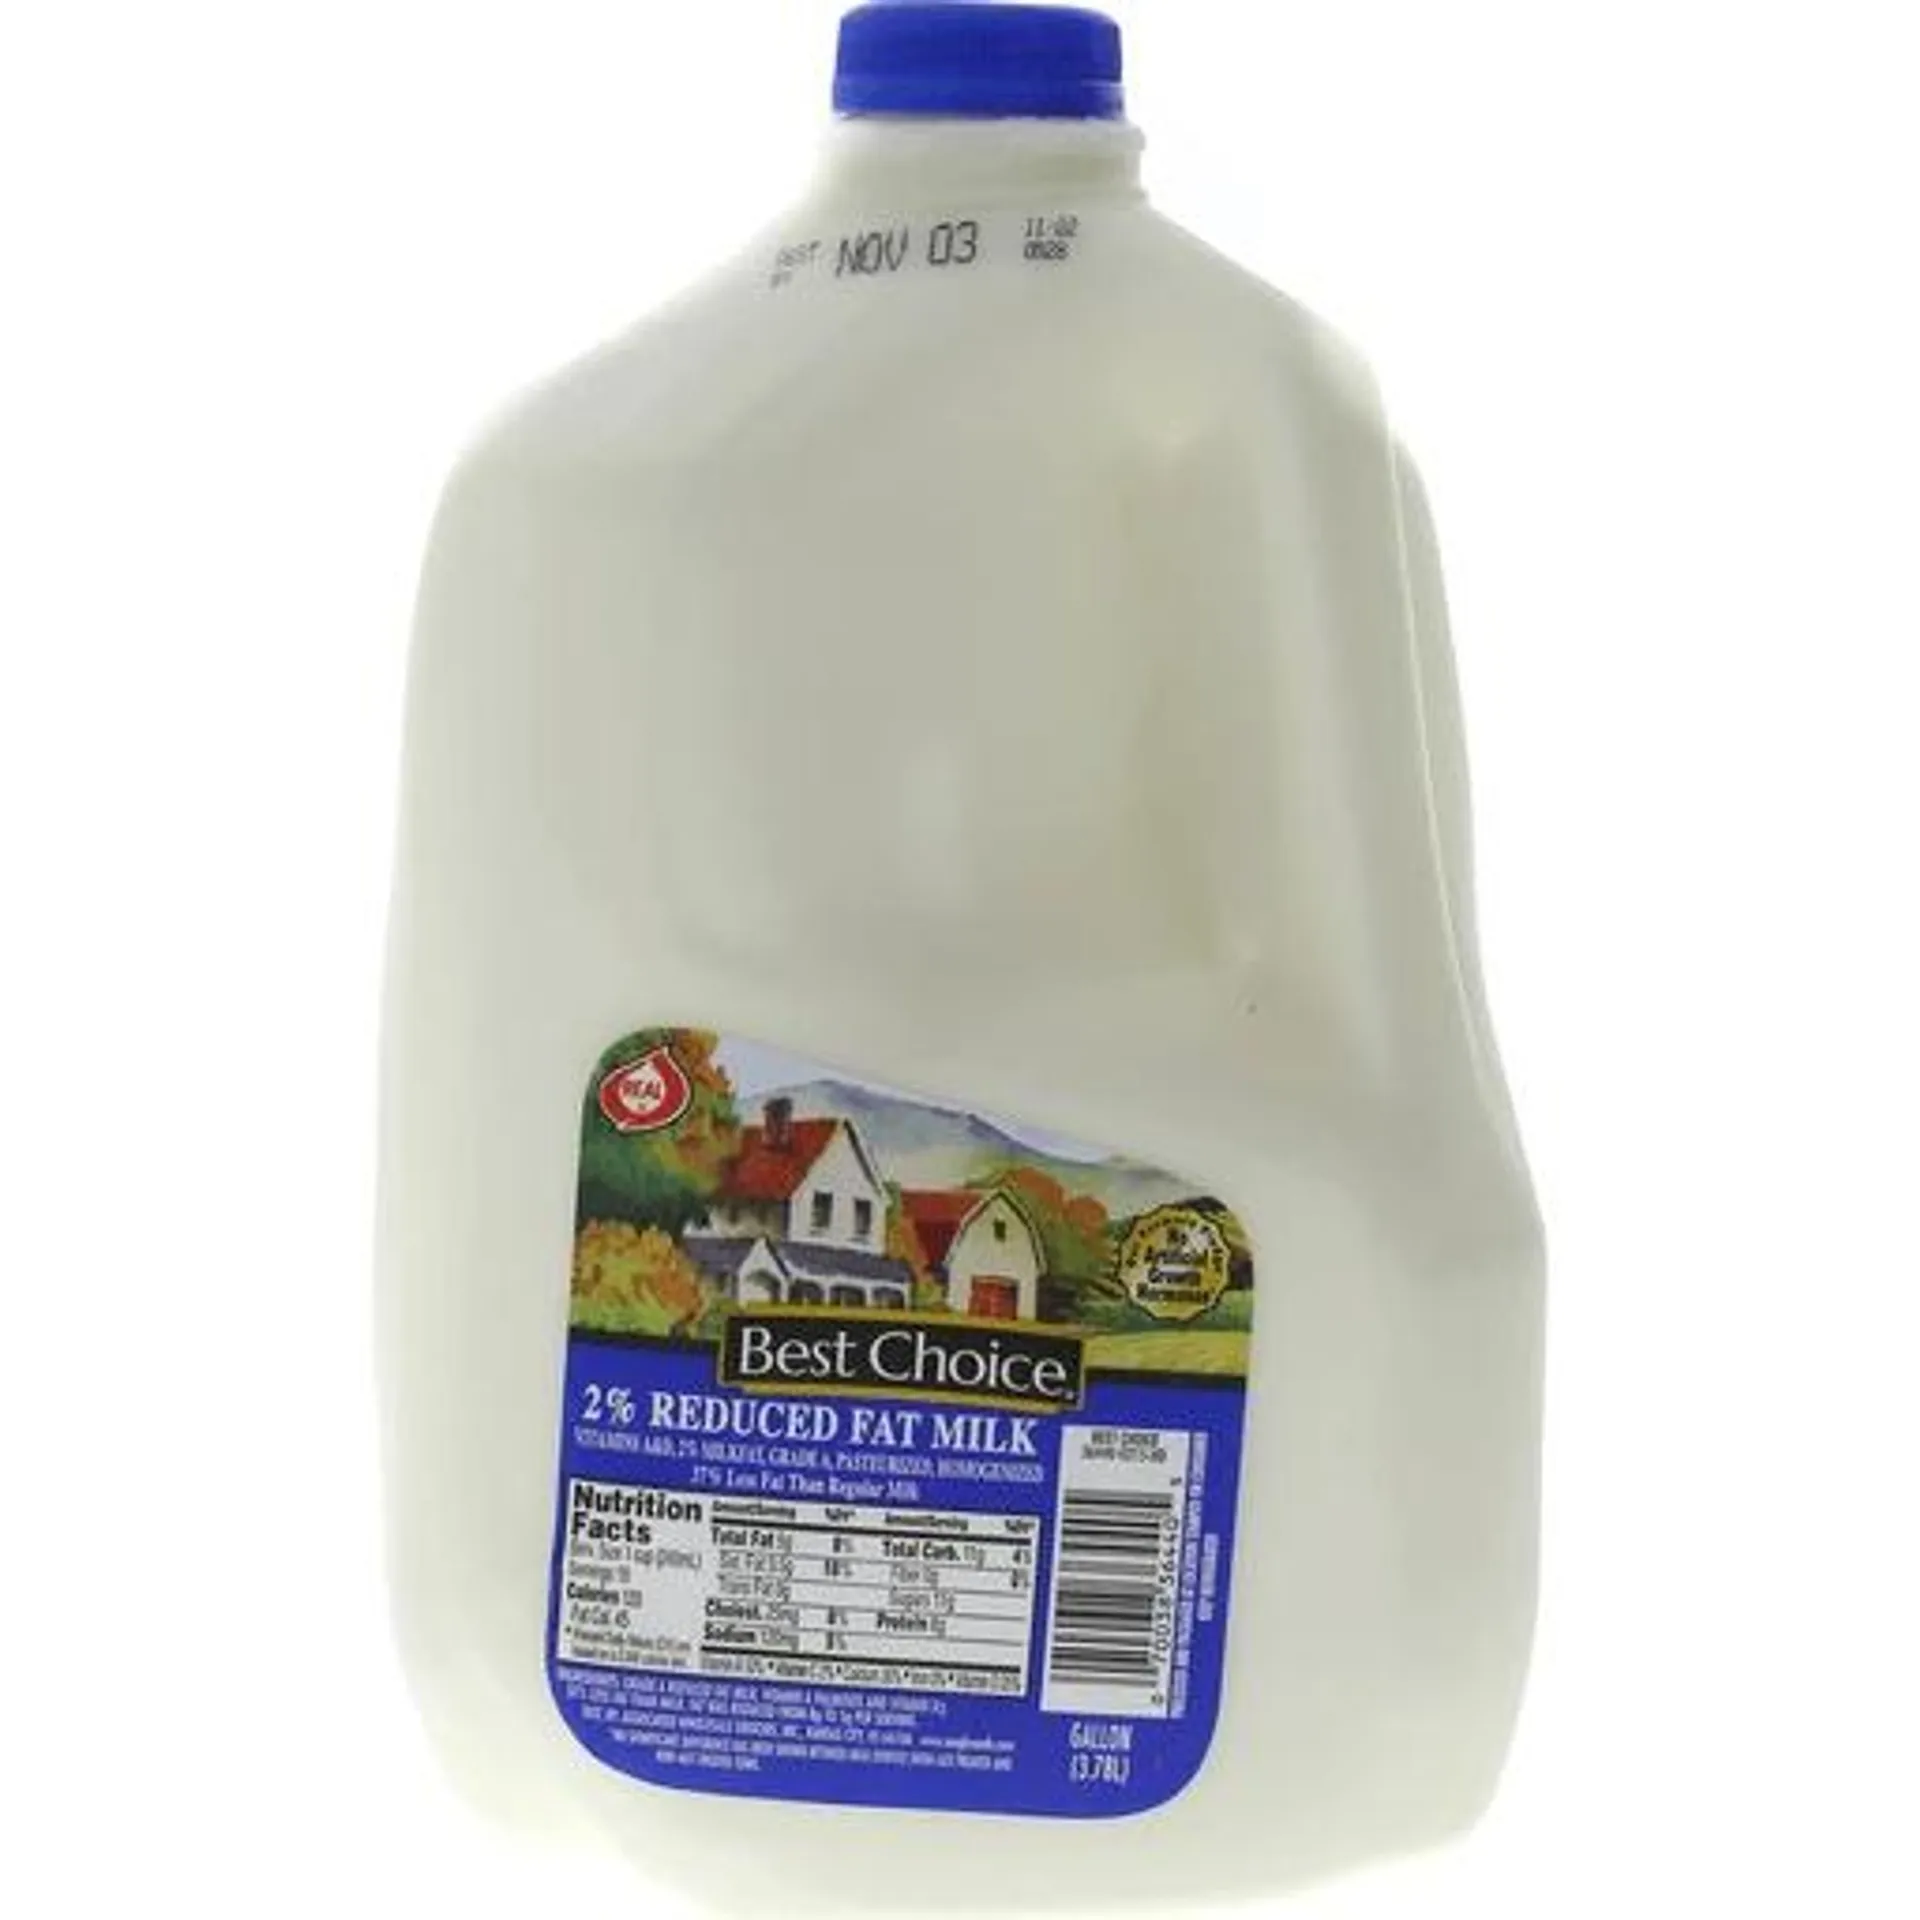 Best Choice 2% Reduced Fat Milk